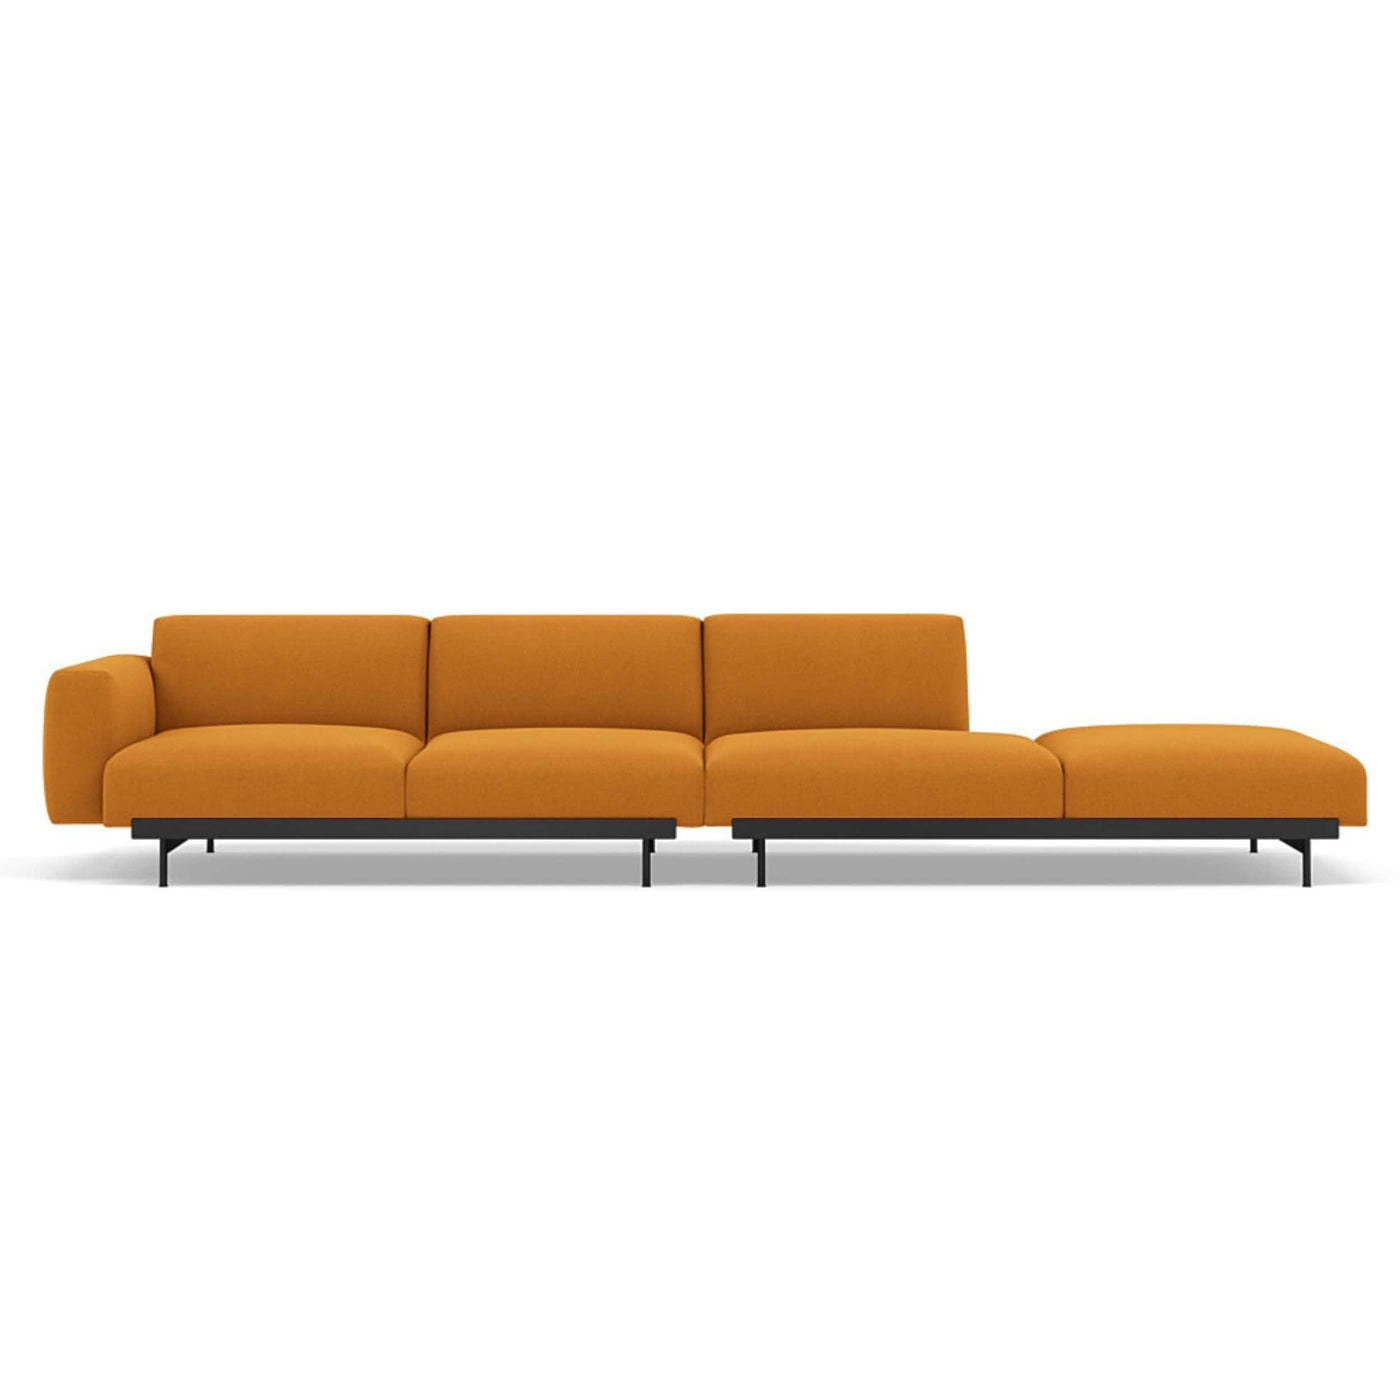 Muuto In Situ Modular 4 Seater Sofa configuration 2 in vidar 472. Made to order from someday designs. #colour_vidar-472